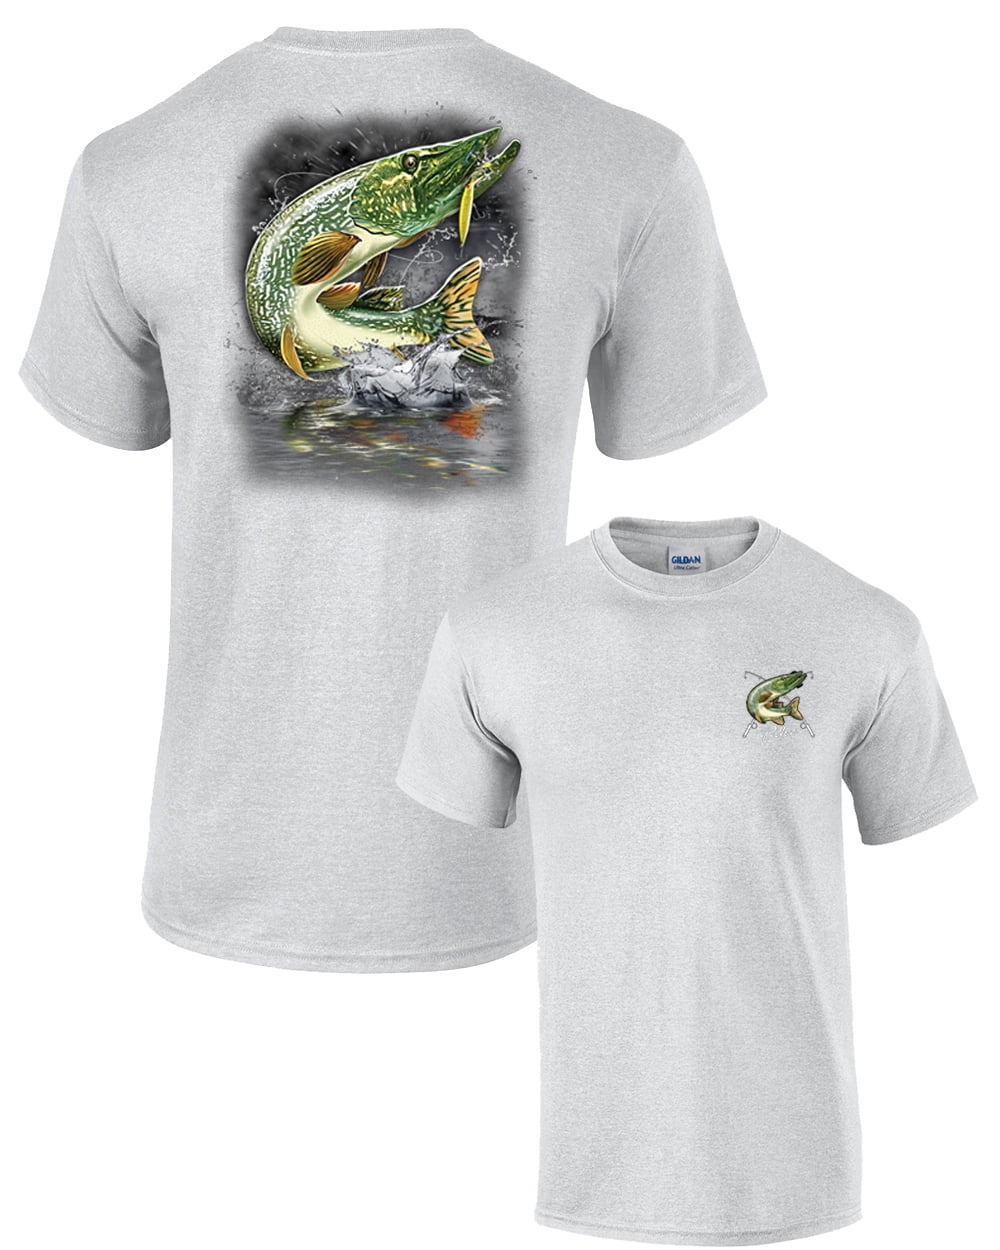 Adult Fishing Short Sleeve T-shirt Jumping Pike-Charcoal-5Xl 